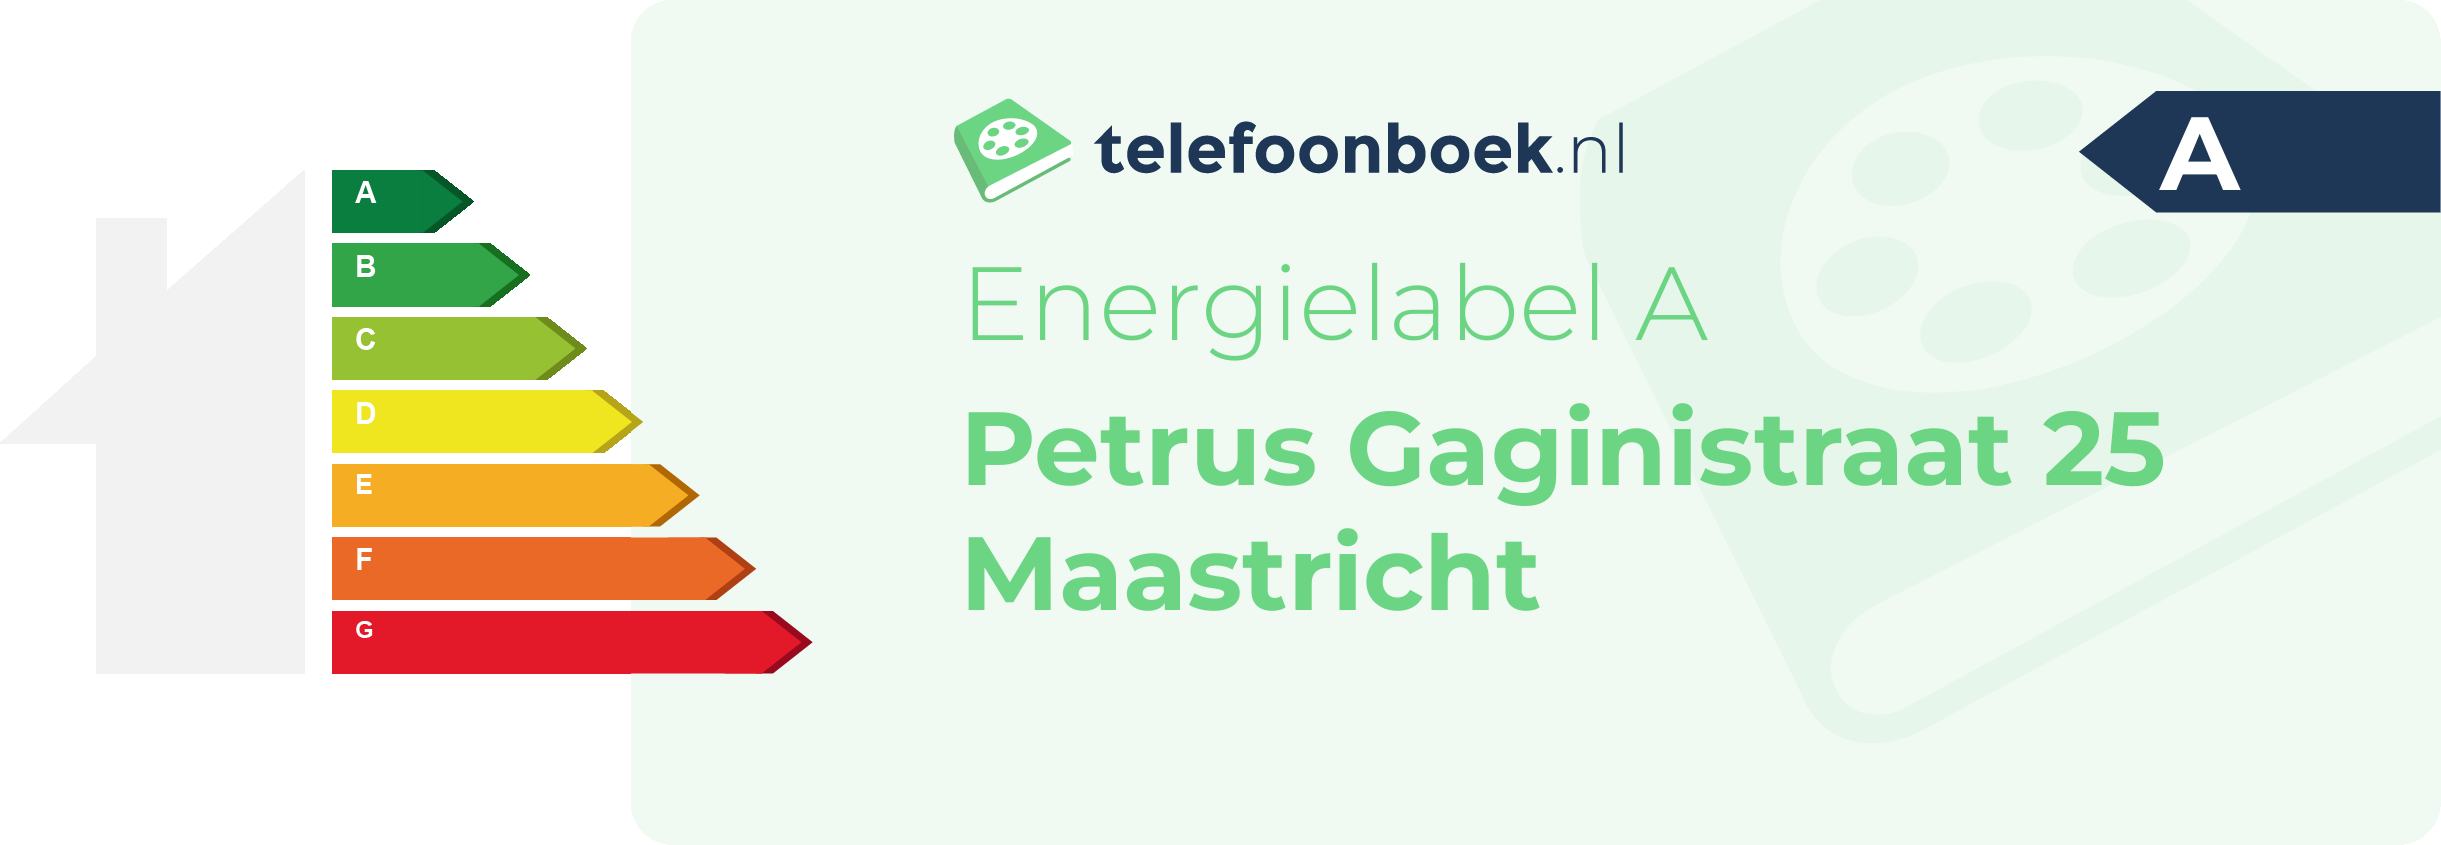 Energielabel Petrus Gaginistraat 25 Maastricht